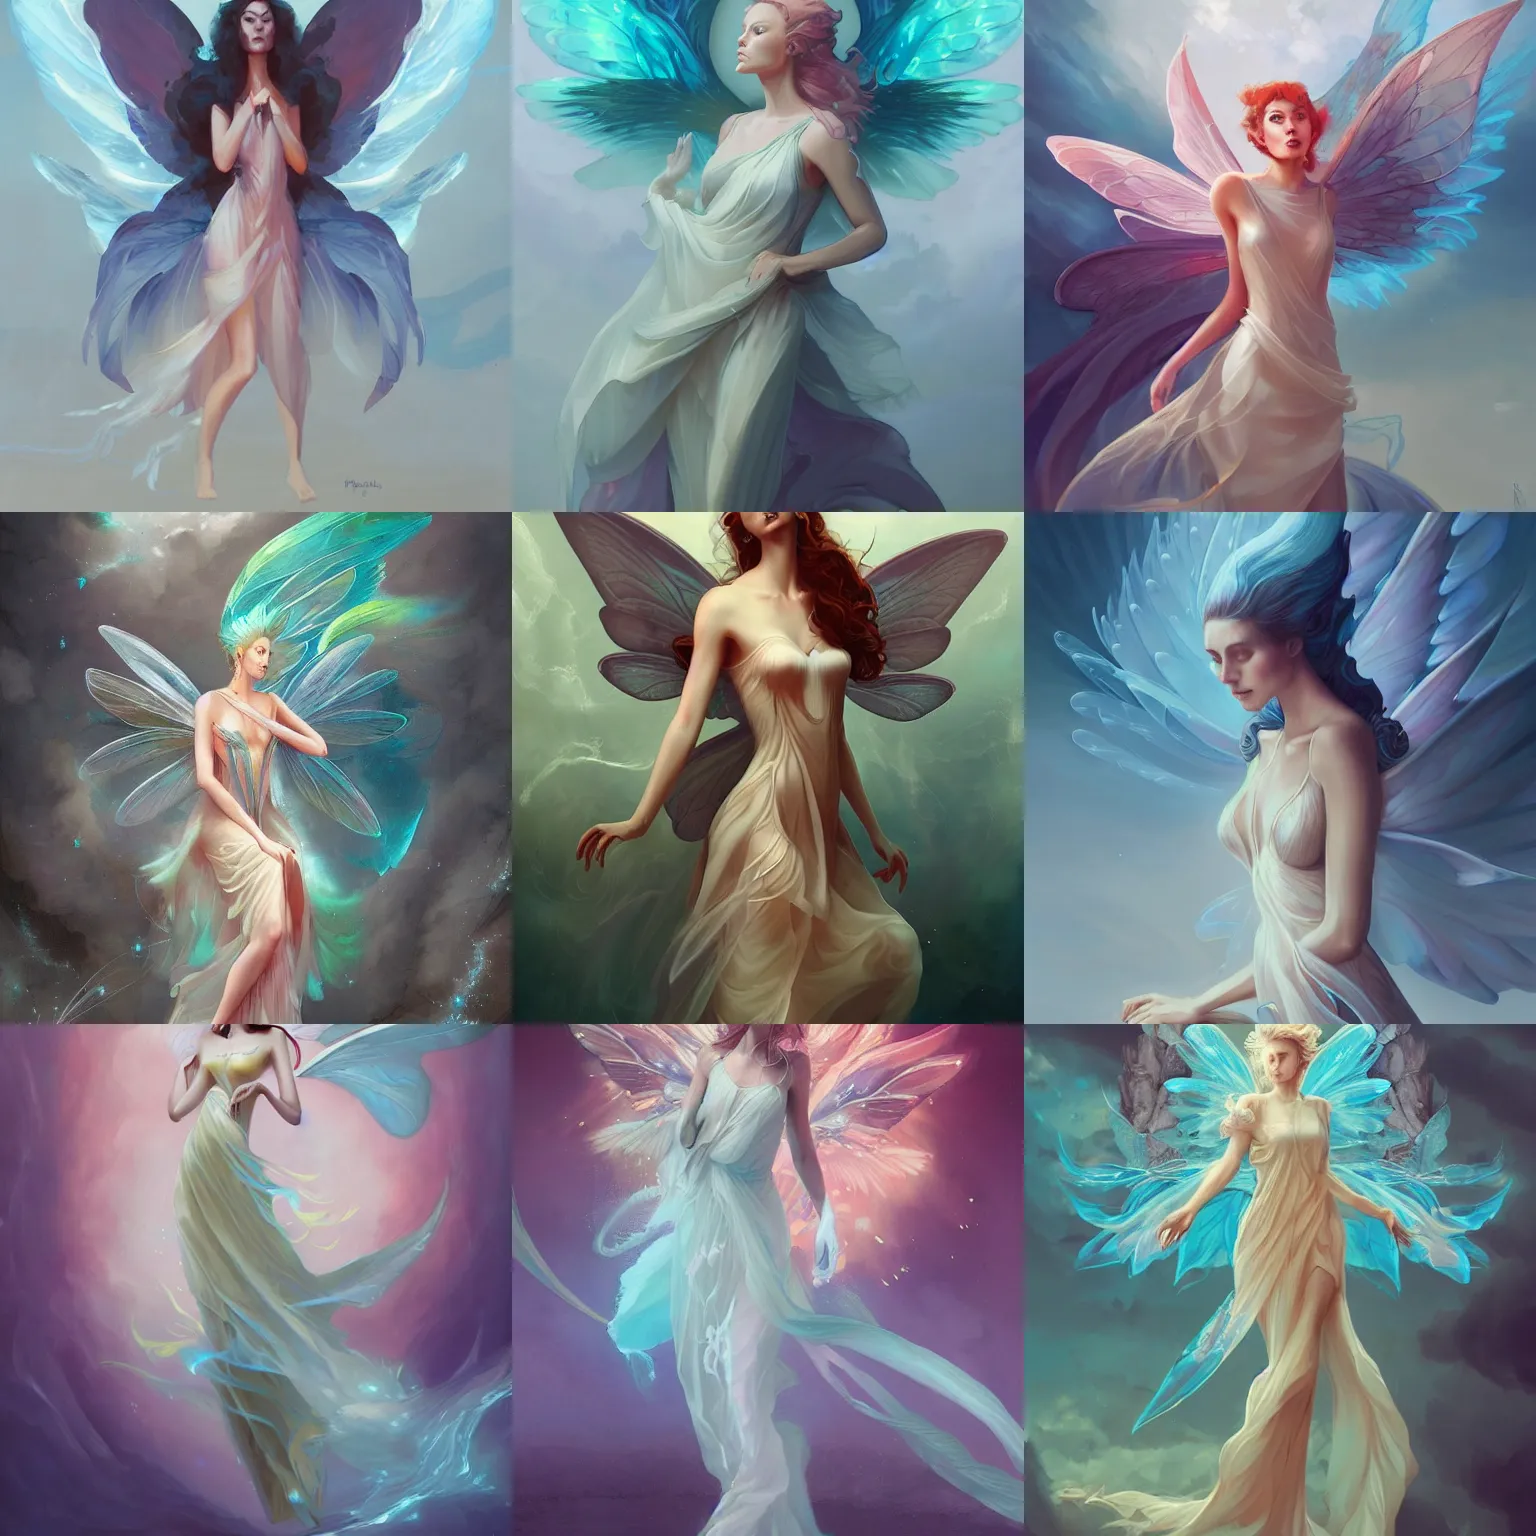 Prompt: prompt portrait of beautiful female fairy, translucent dress, fluid simulation, wispy gigantic wings, by Peter Mohrbacher, trending on artstation